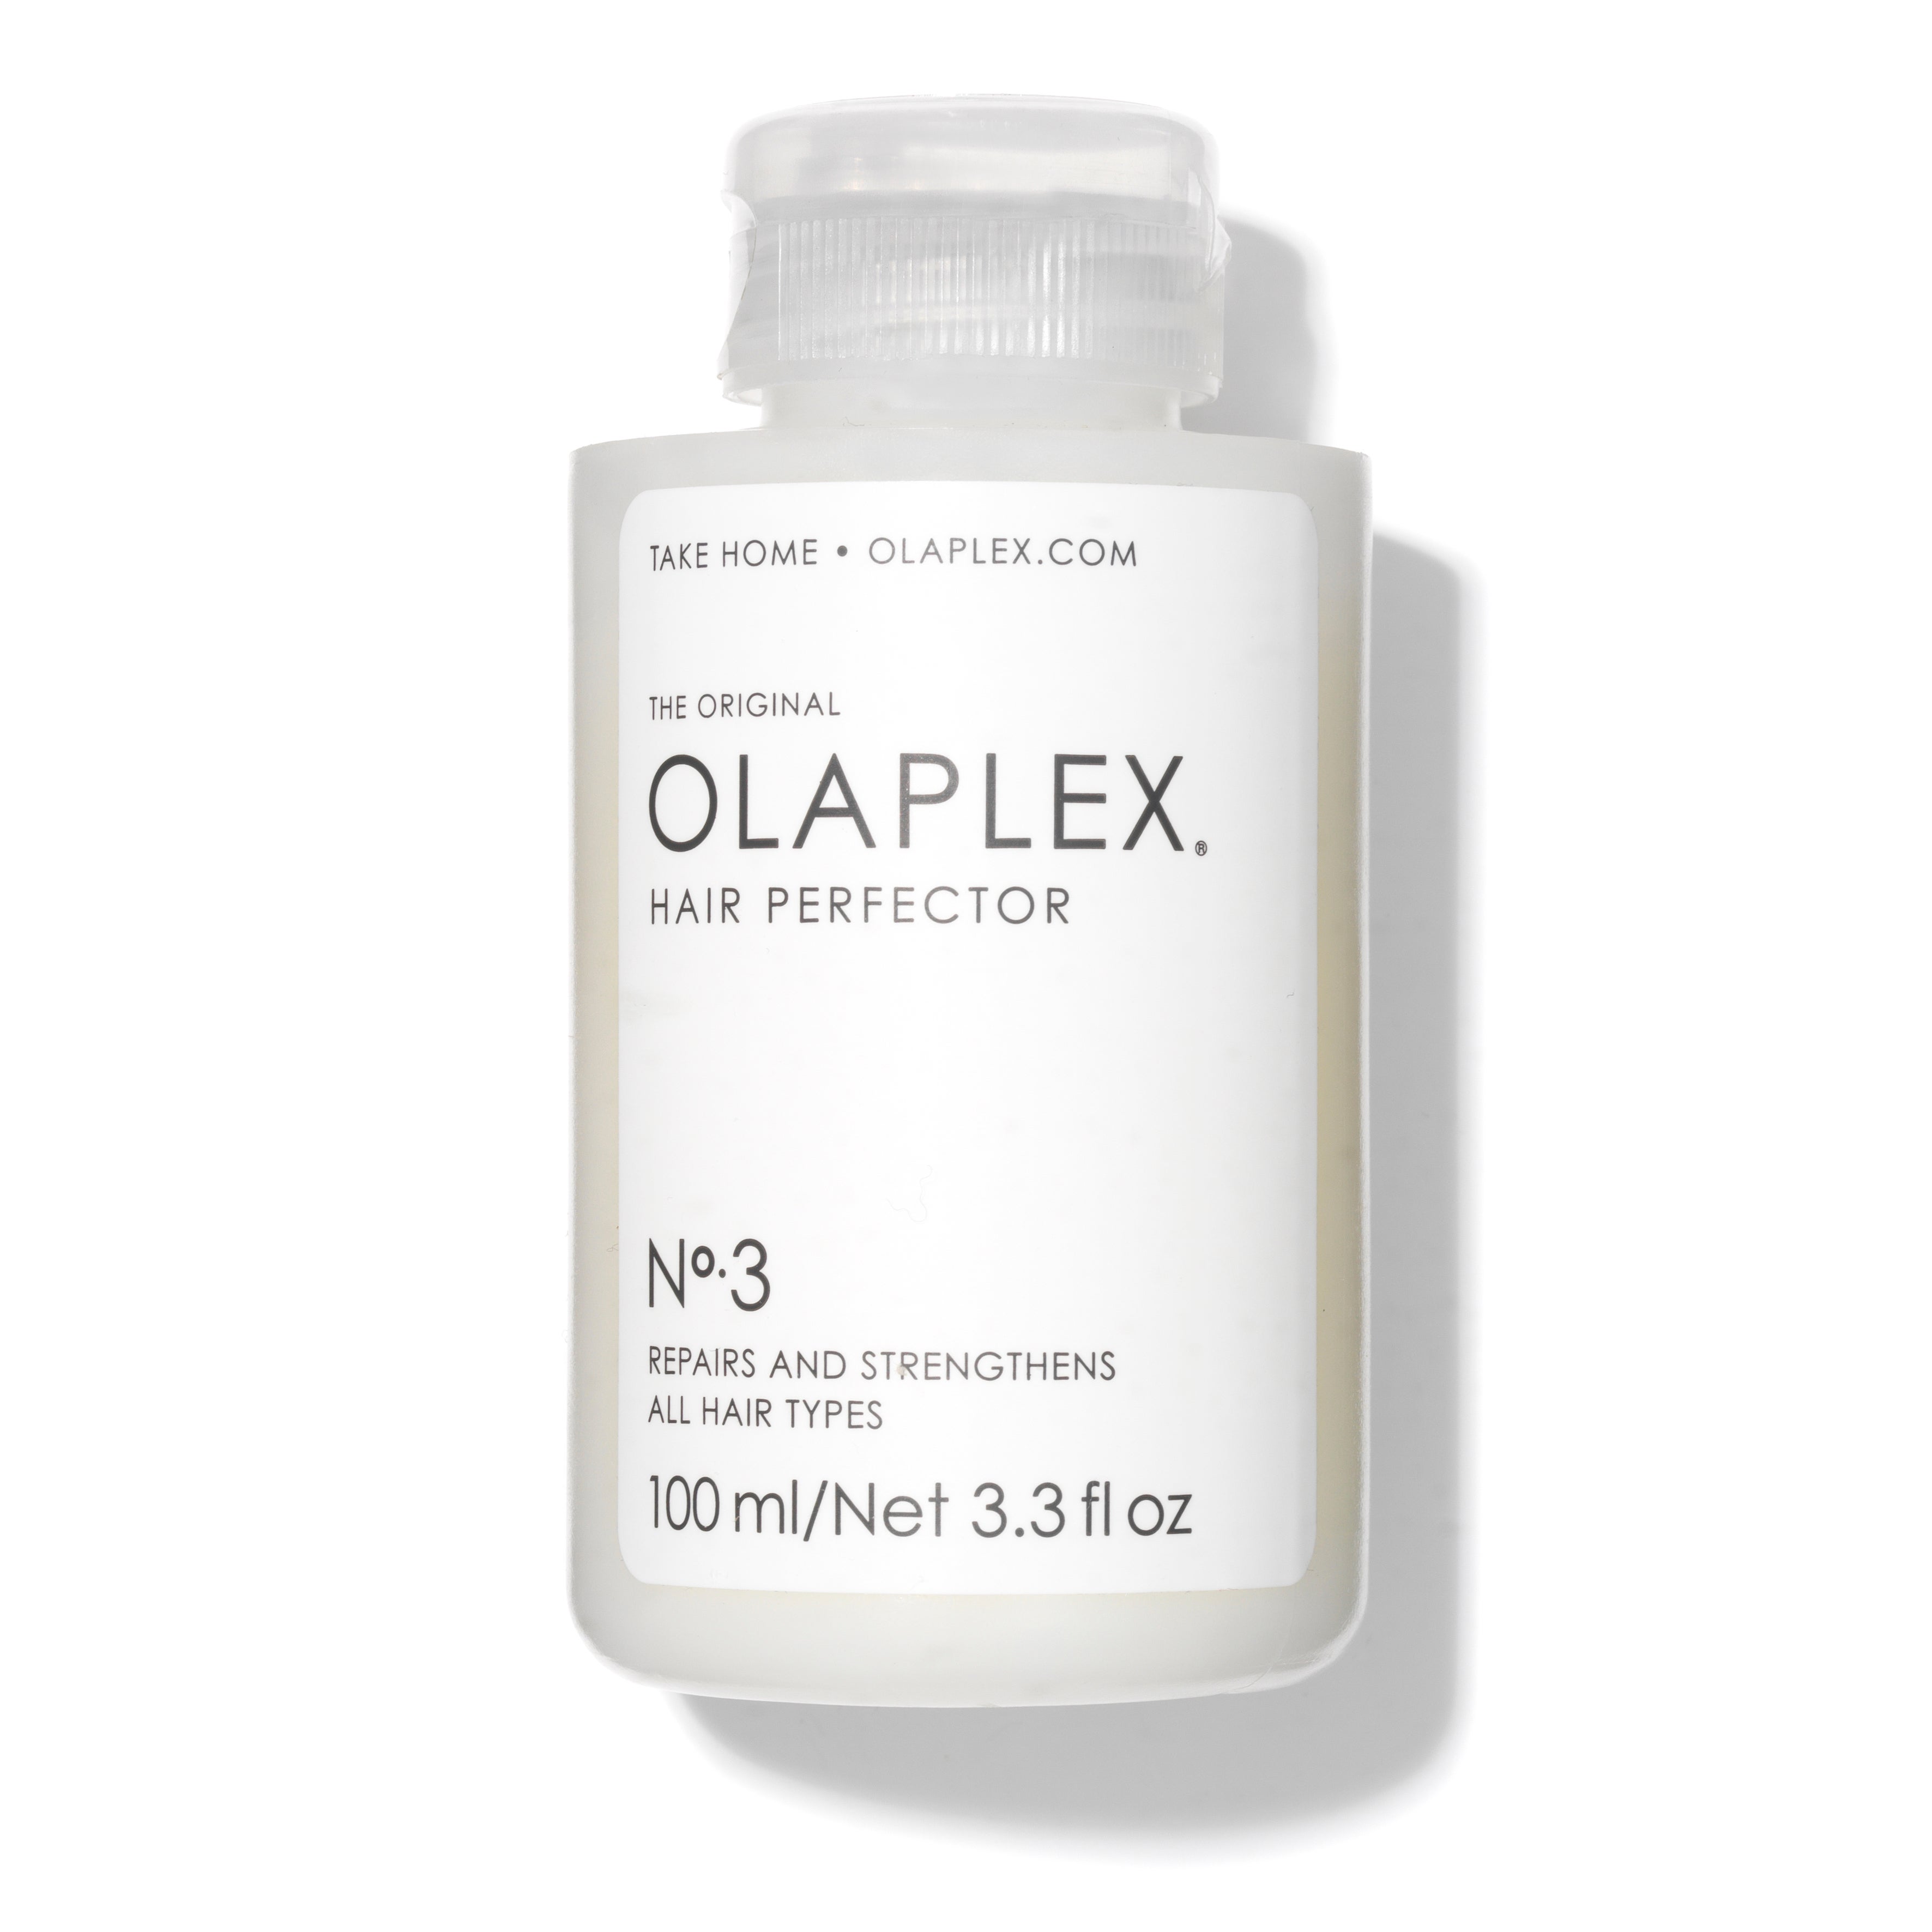 Is OLAPLEX treatment worth it?